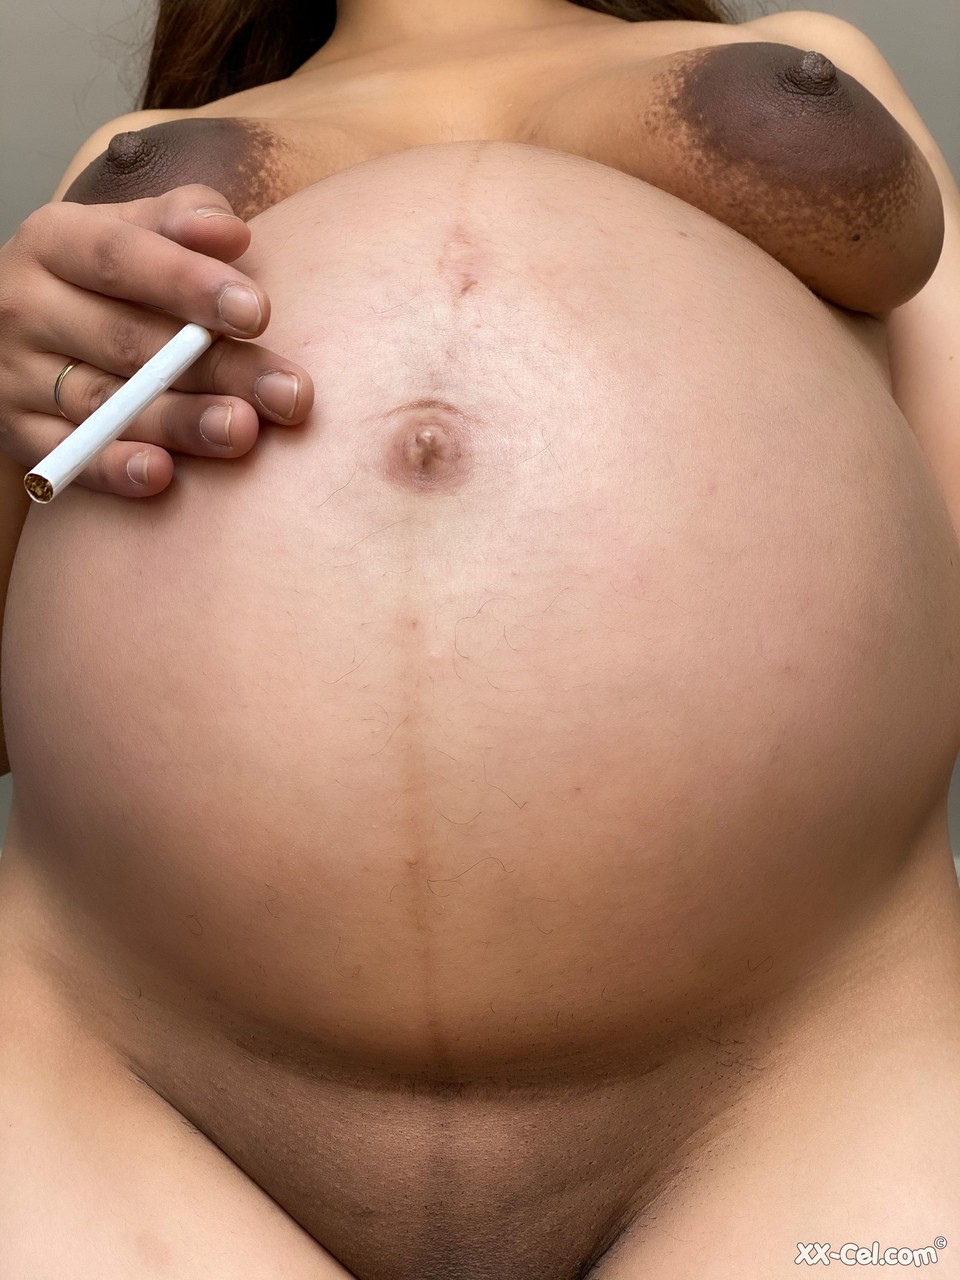 Pregnant smoker Leila teasing nude with her bulging tummy & her dark nipples foto pornográfica #424132694 | XX Cel Pics, Leila, Pregnant, pornografia móvel